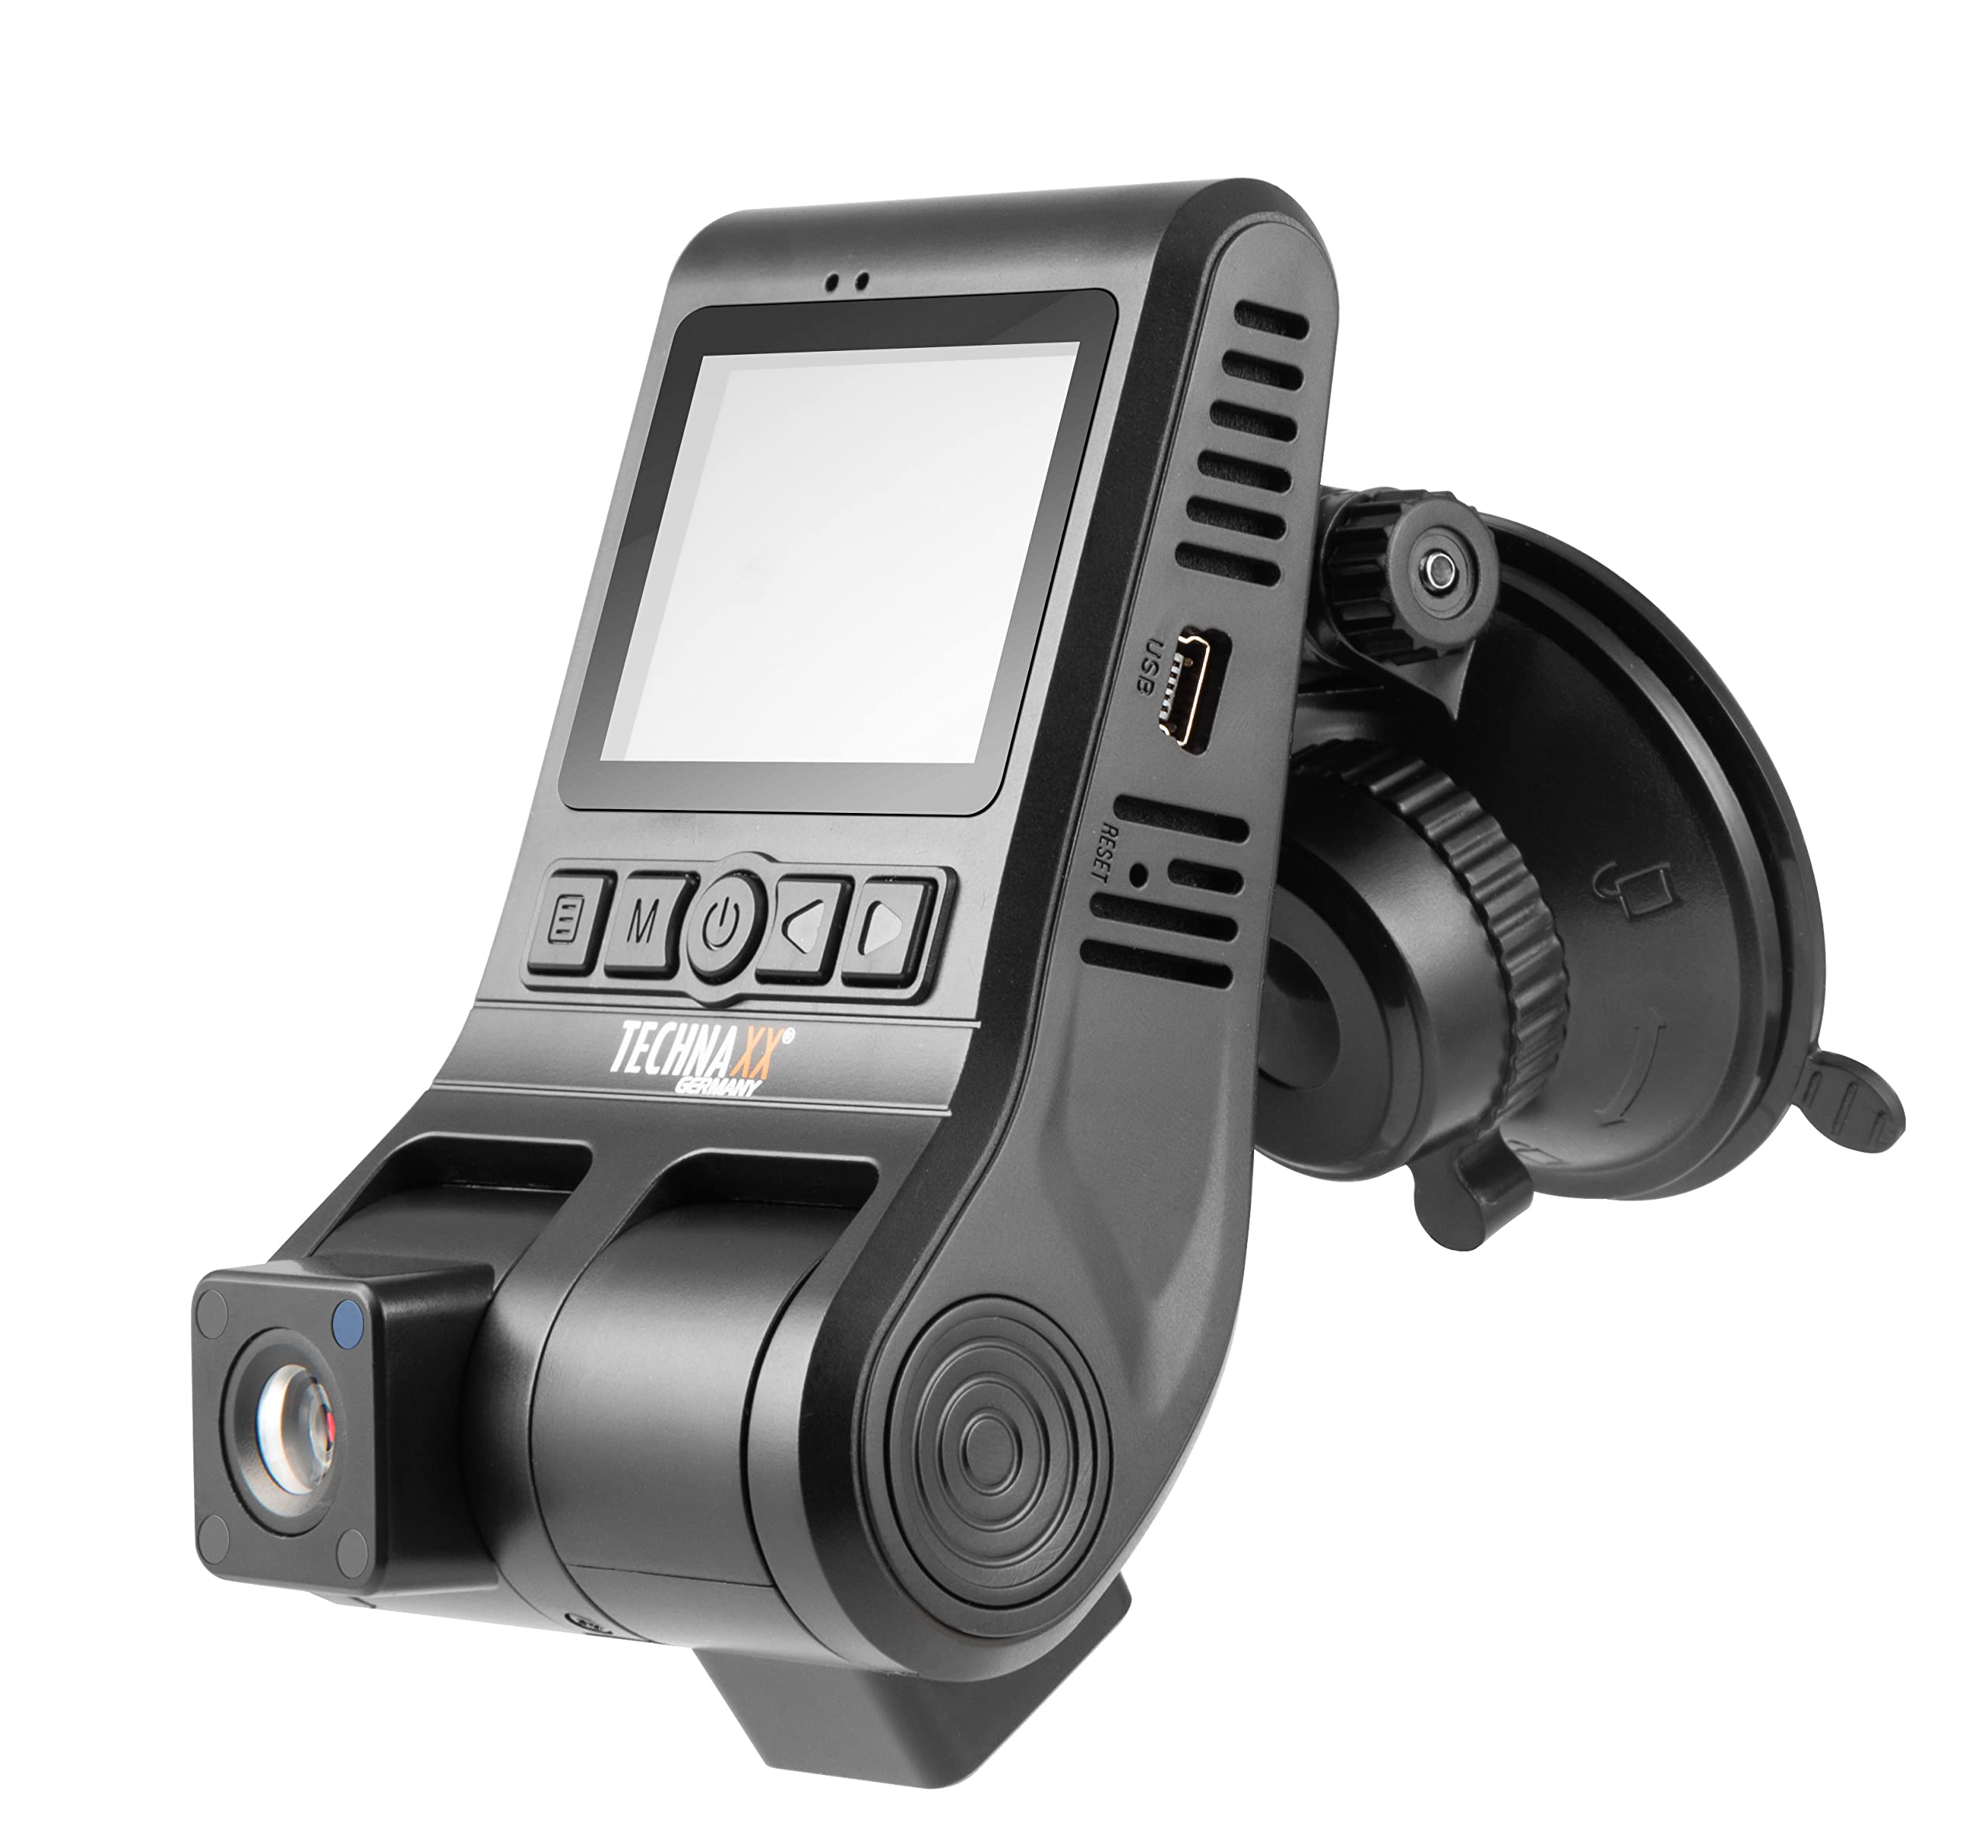 Technaxx TX-185 Dashcam Blickwinkel horizontal max.=120° 5V Display, Dual-Kamera, G-Sensor, Innenra